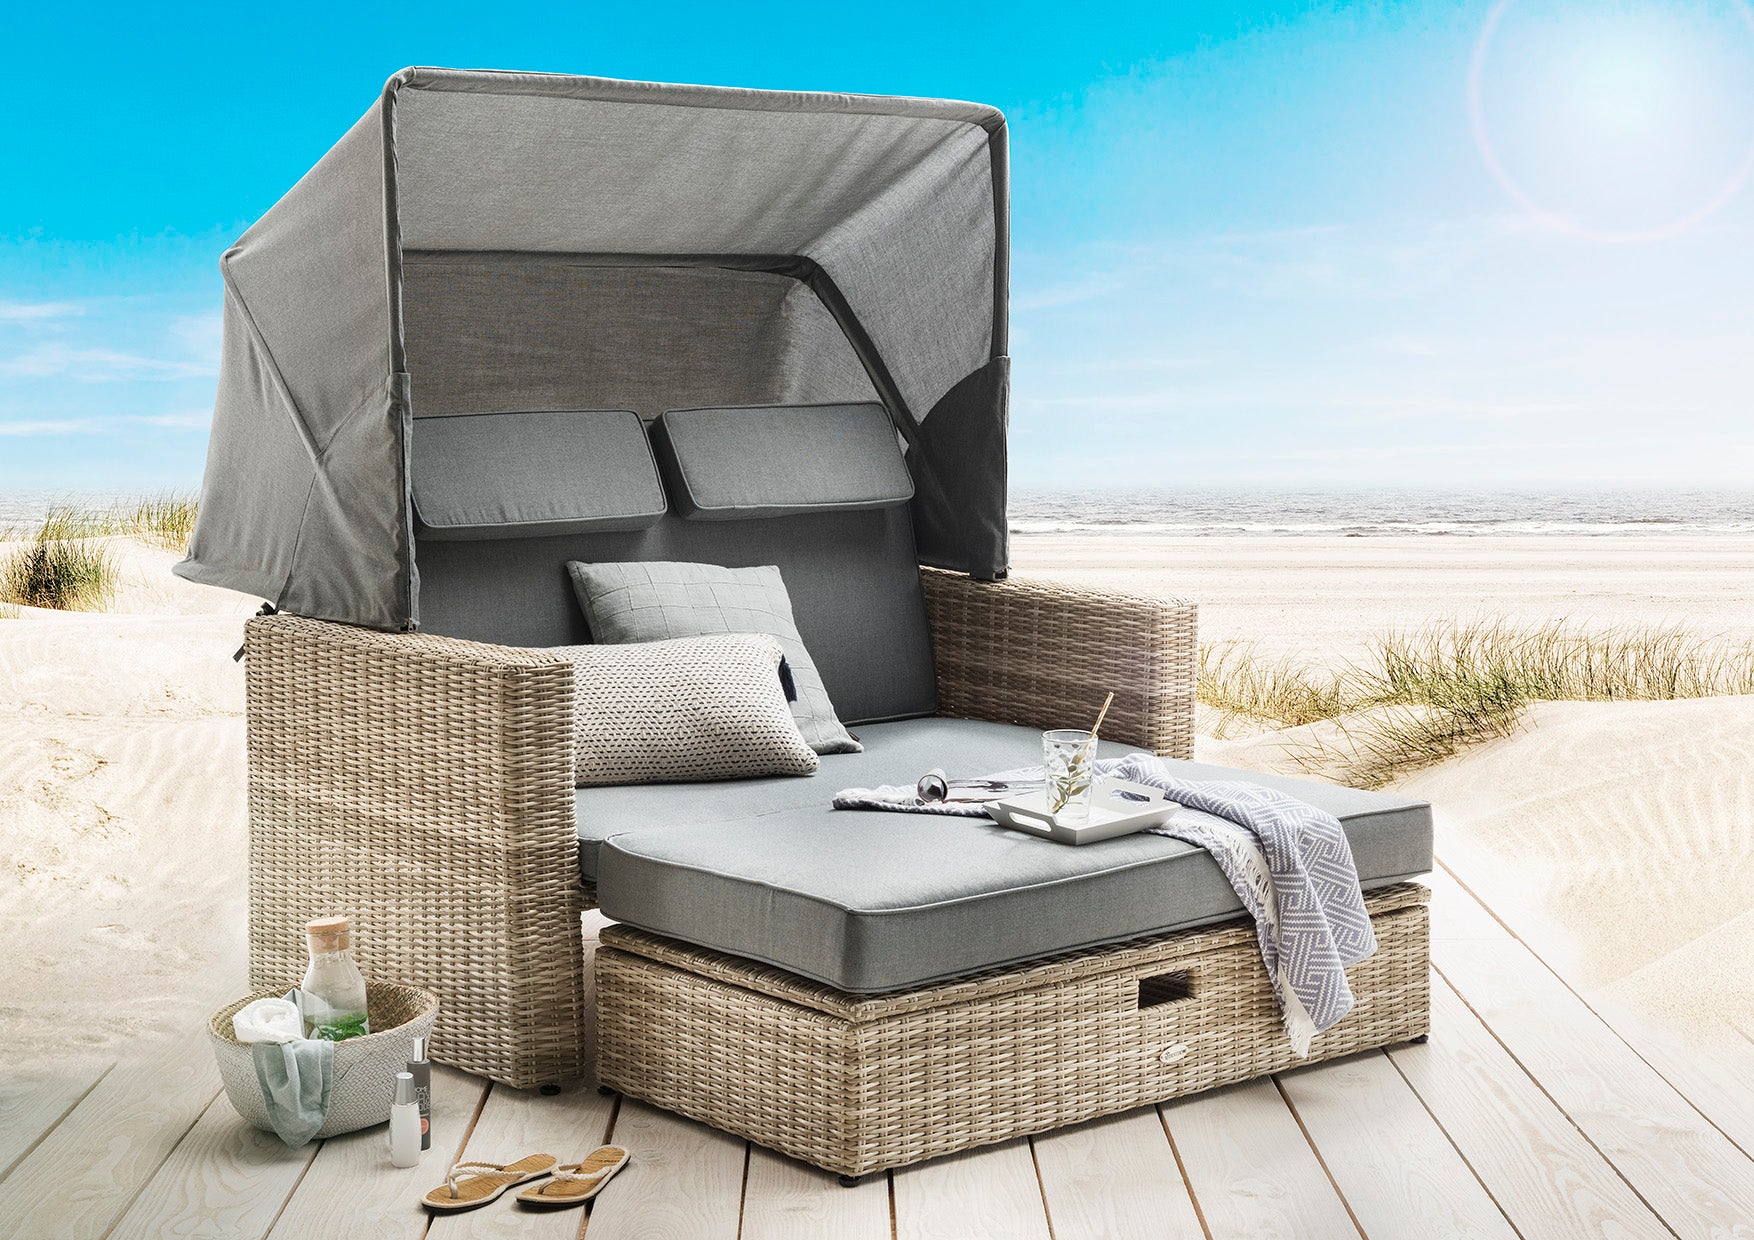 FERRARA | Multifunktions-Lounge Sonneninsel 2 Personen Polster abnehmbares Dach white wash | 1a-zuhause